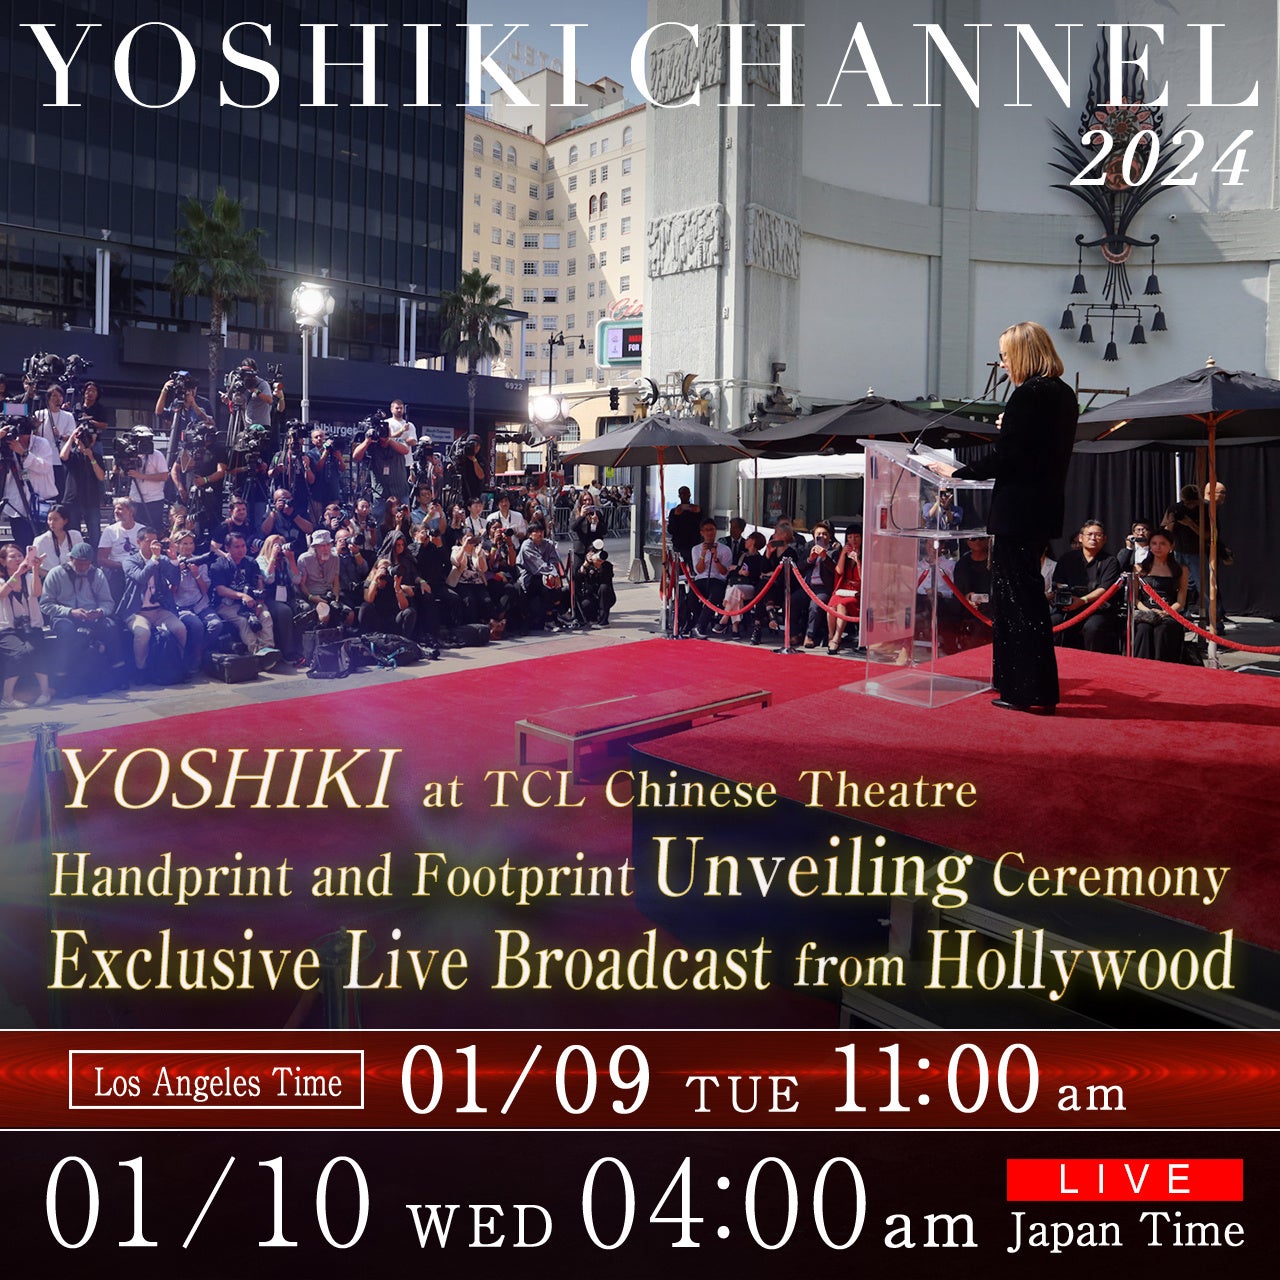 YOSHIKI 手形・足形“完成”披露セレモニー　ハリウッドから独占生中継 米チャイニーズ・シアター100年の歴史に再び名を刻む瞬間を生放送